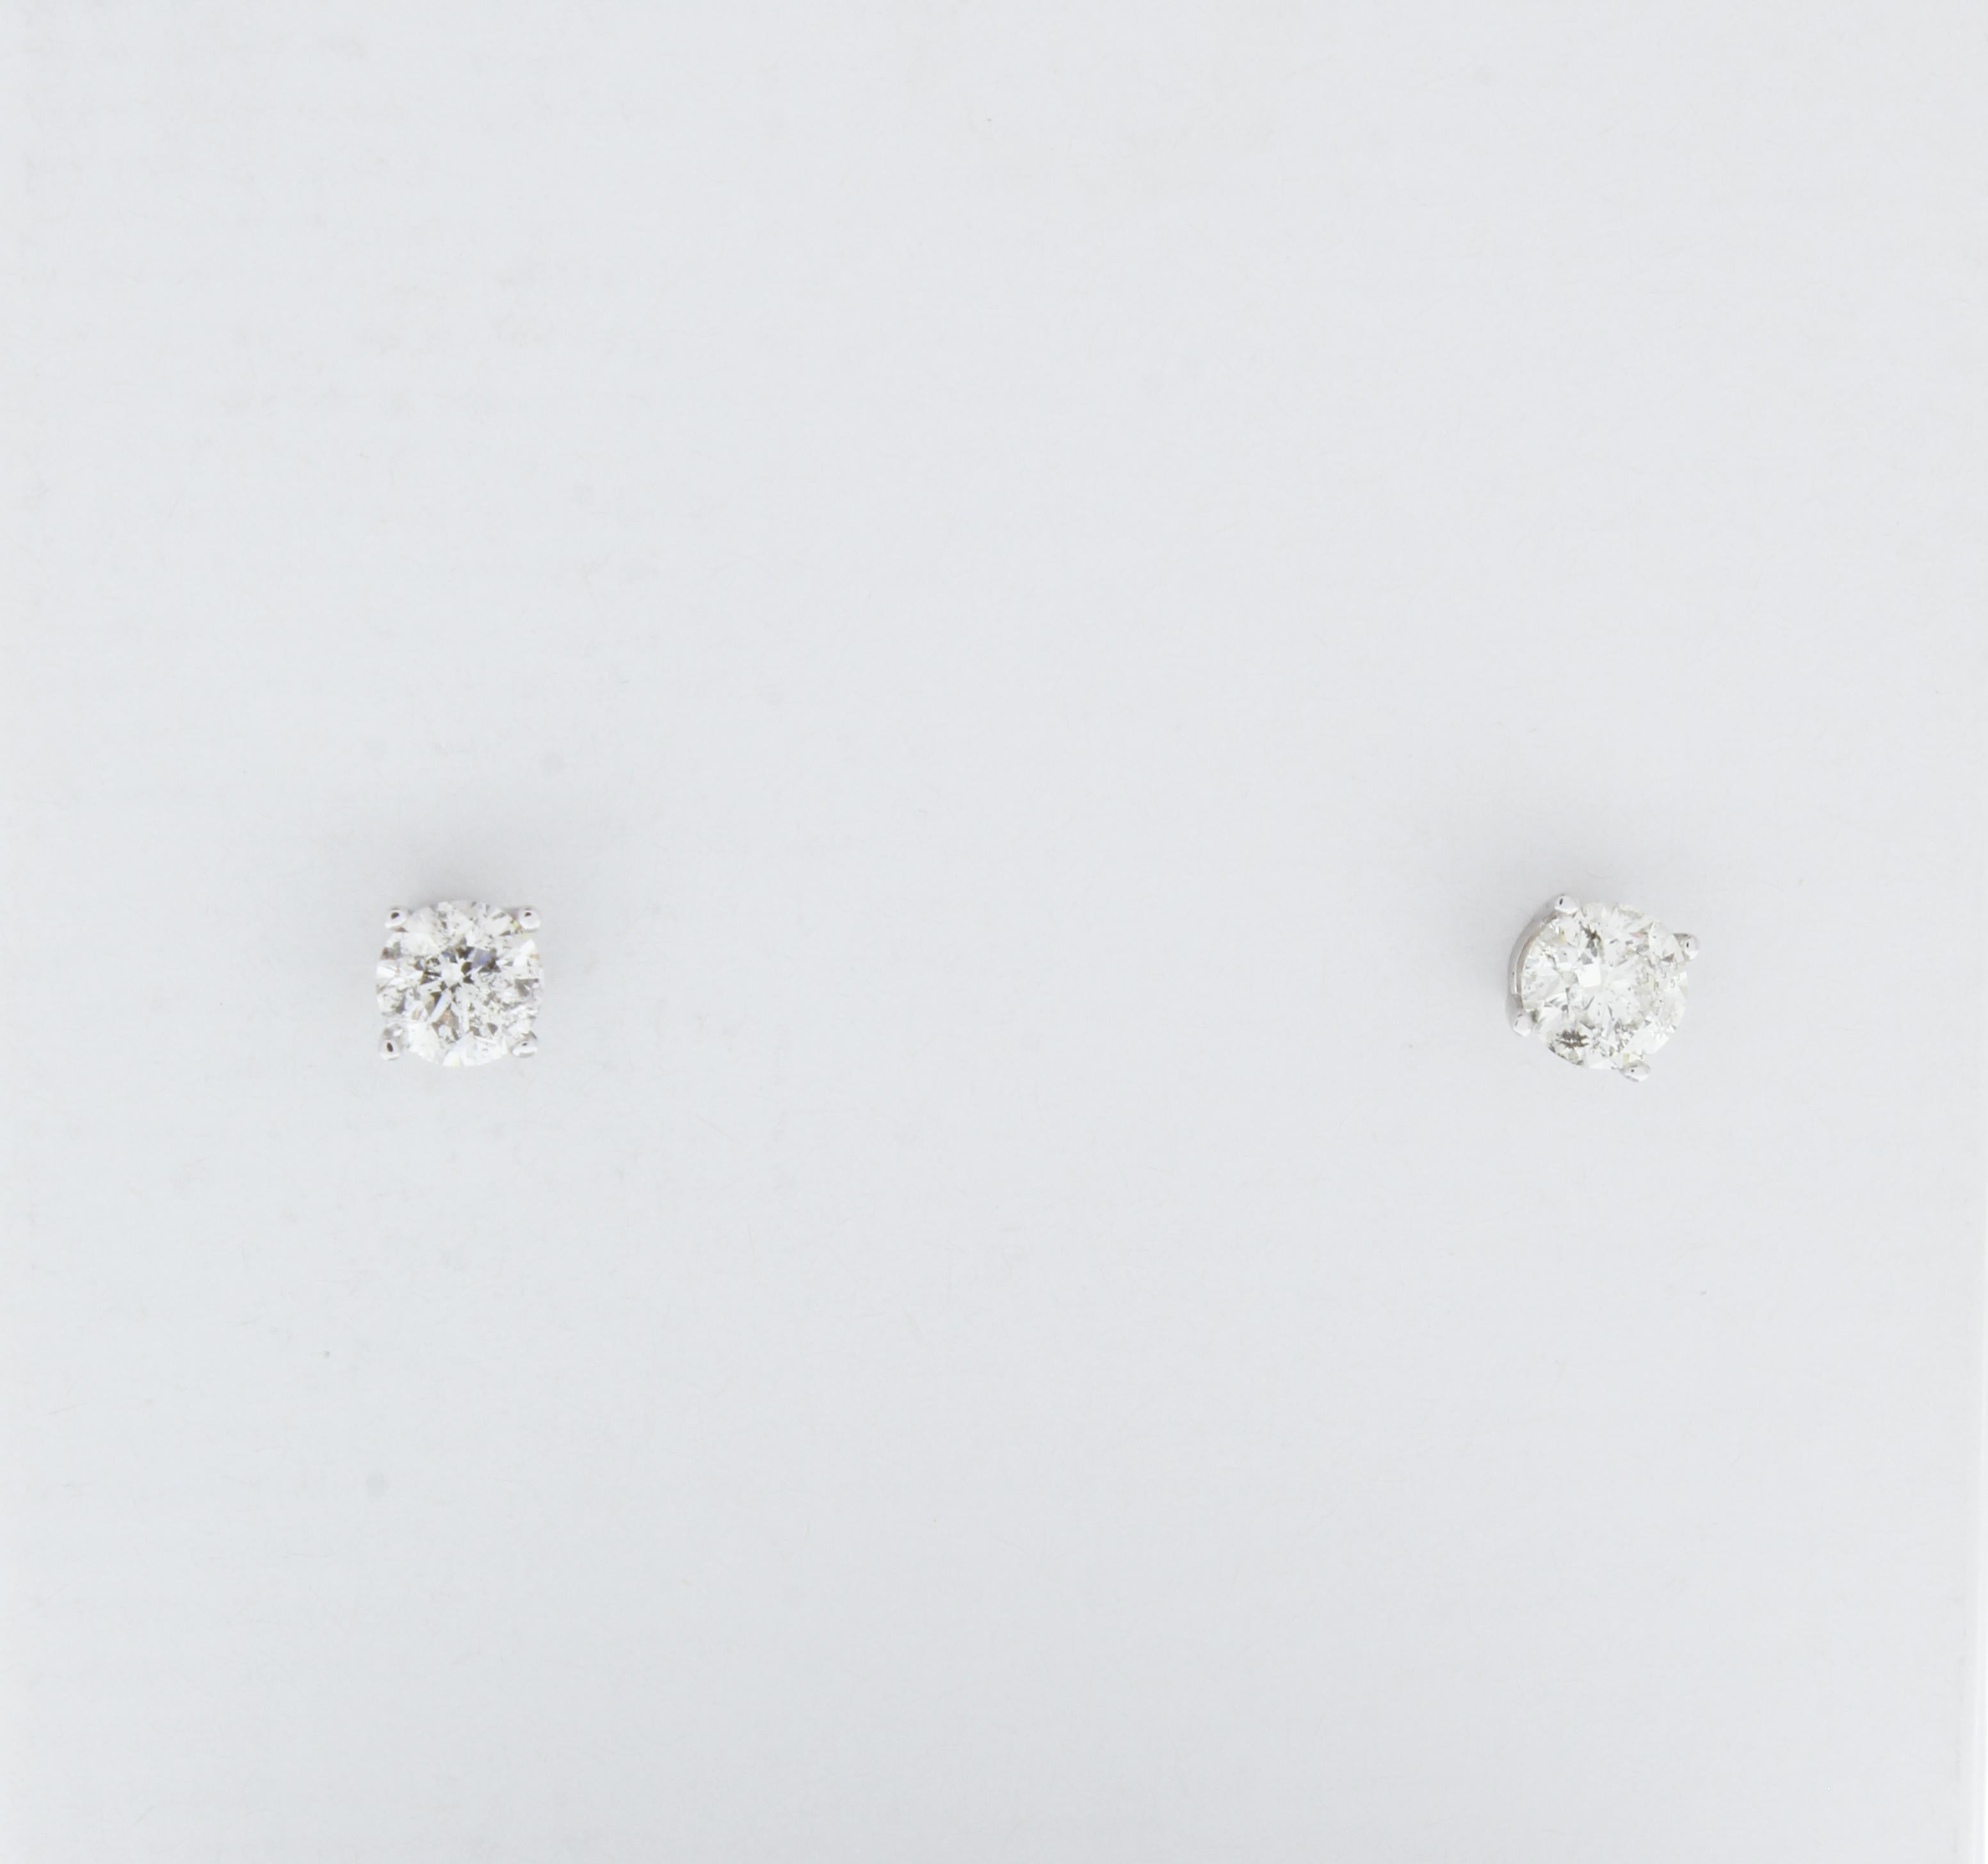 1 carat total weight diamond stud earrings